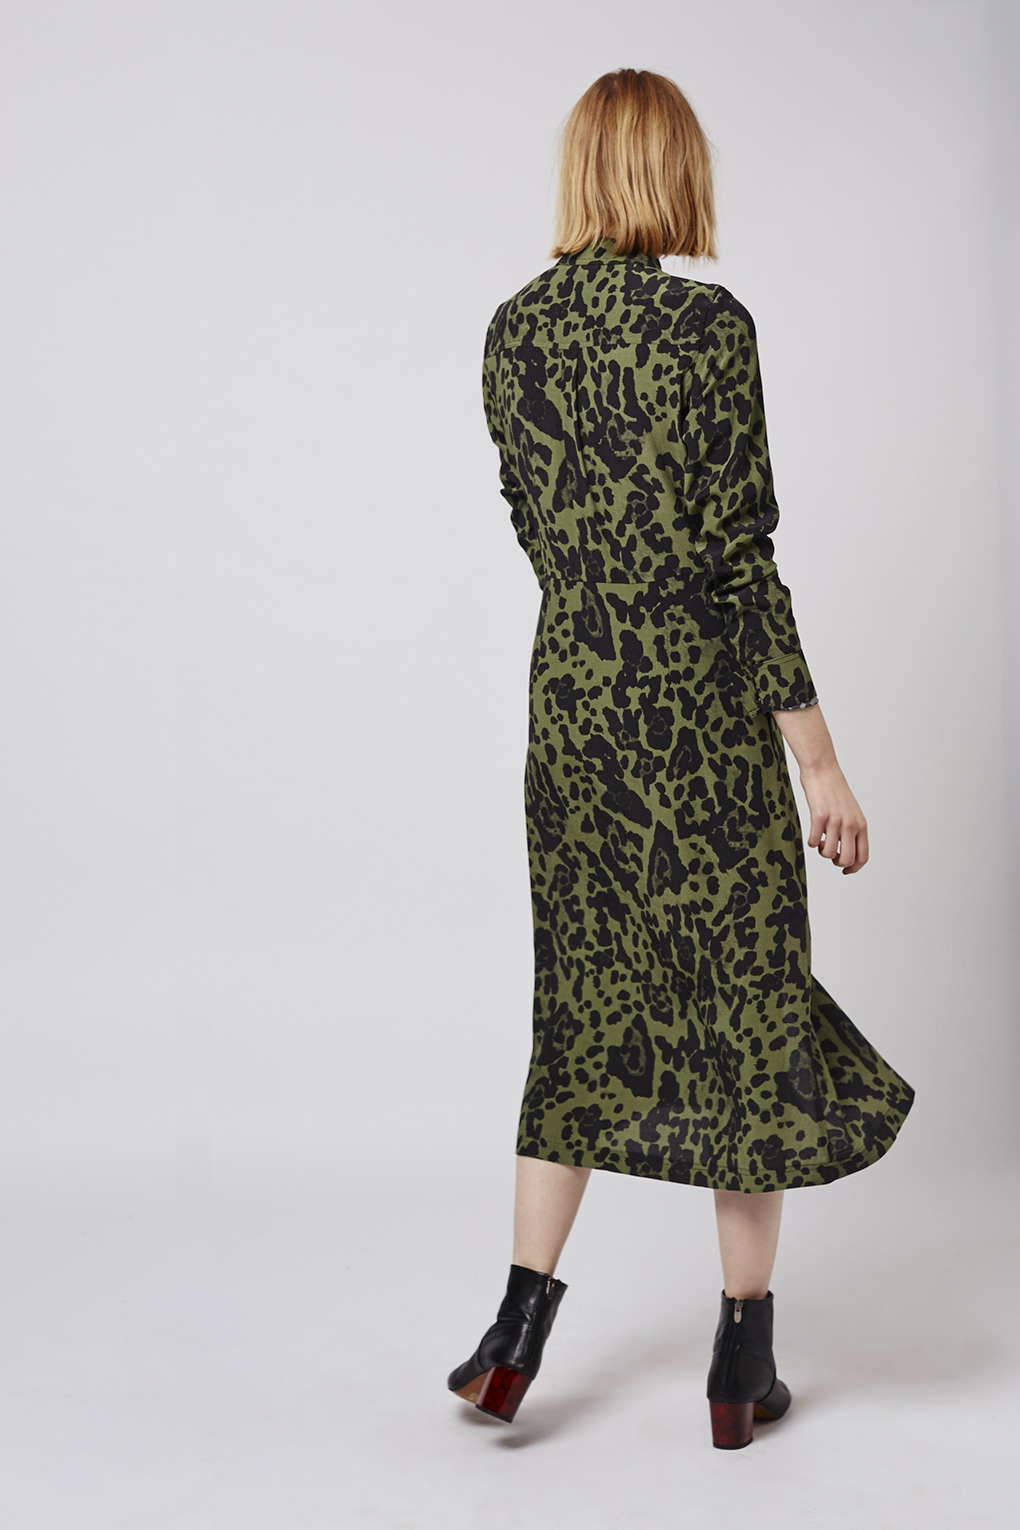 Topshop Green Leopard Print Dress ...